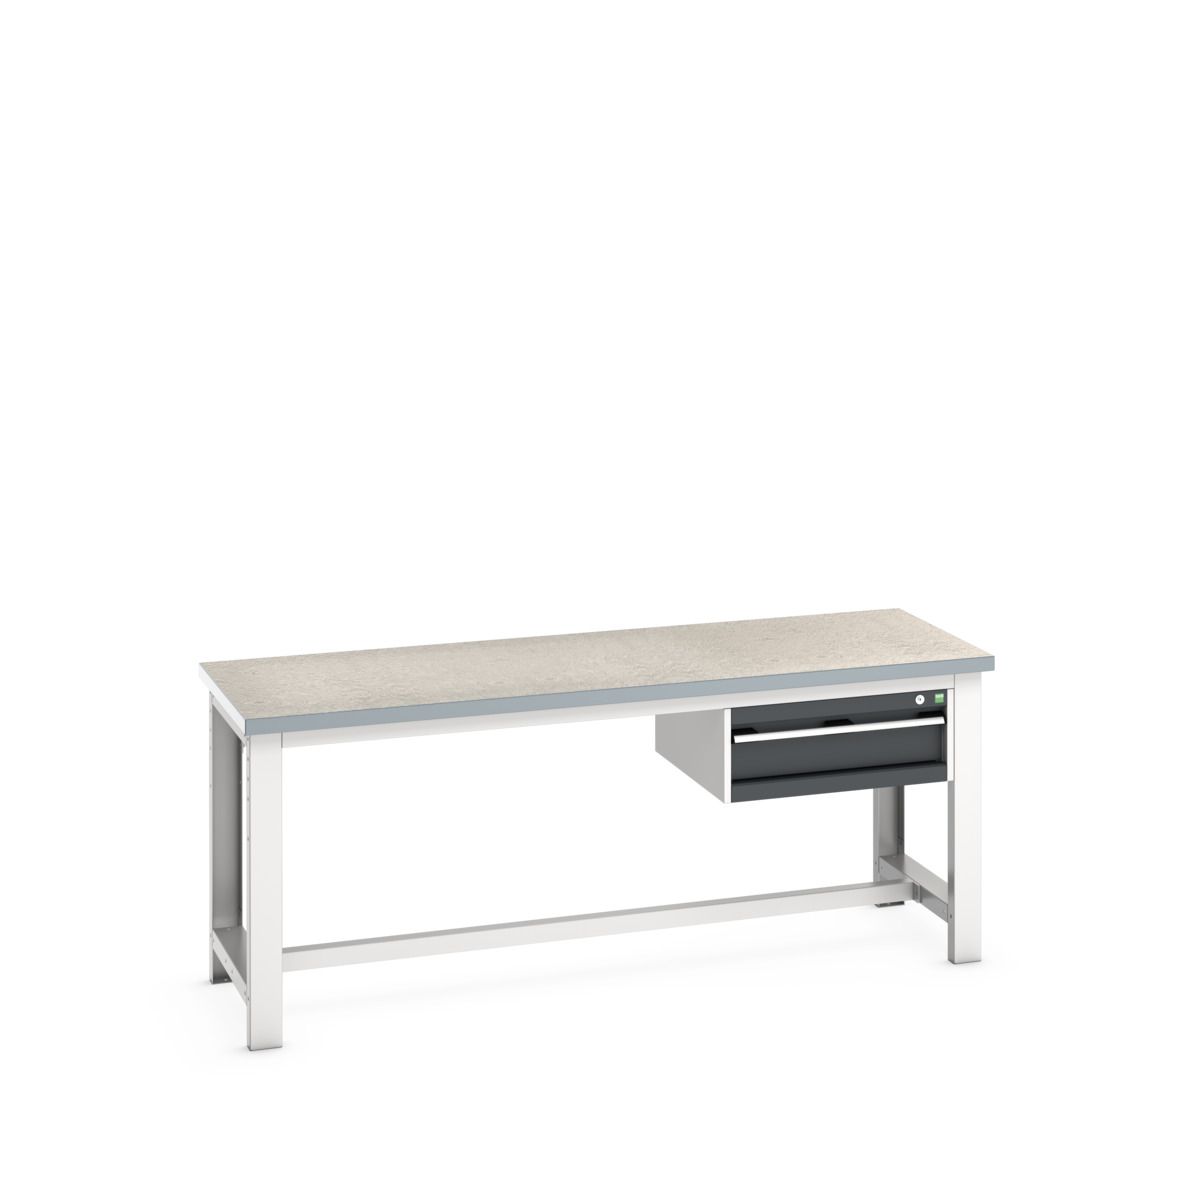 41003400. - cubio framework bench (lino) 